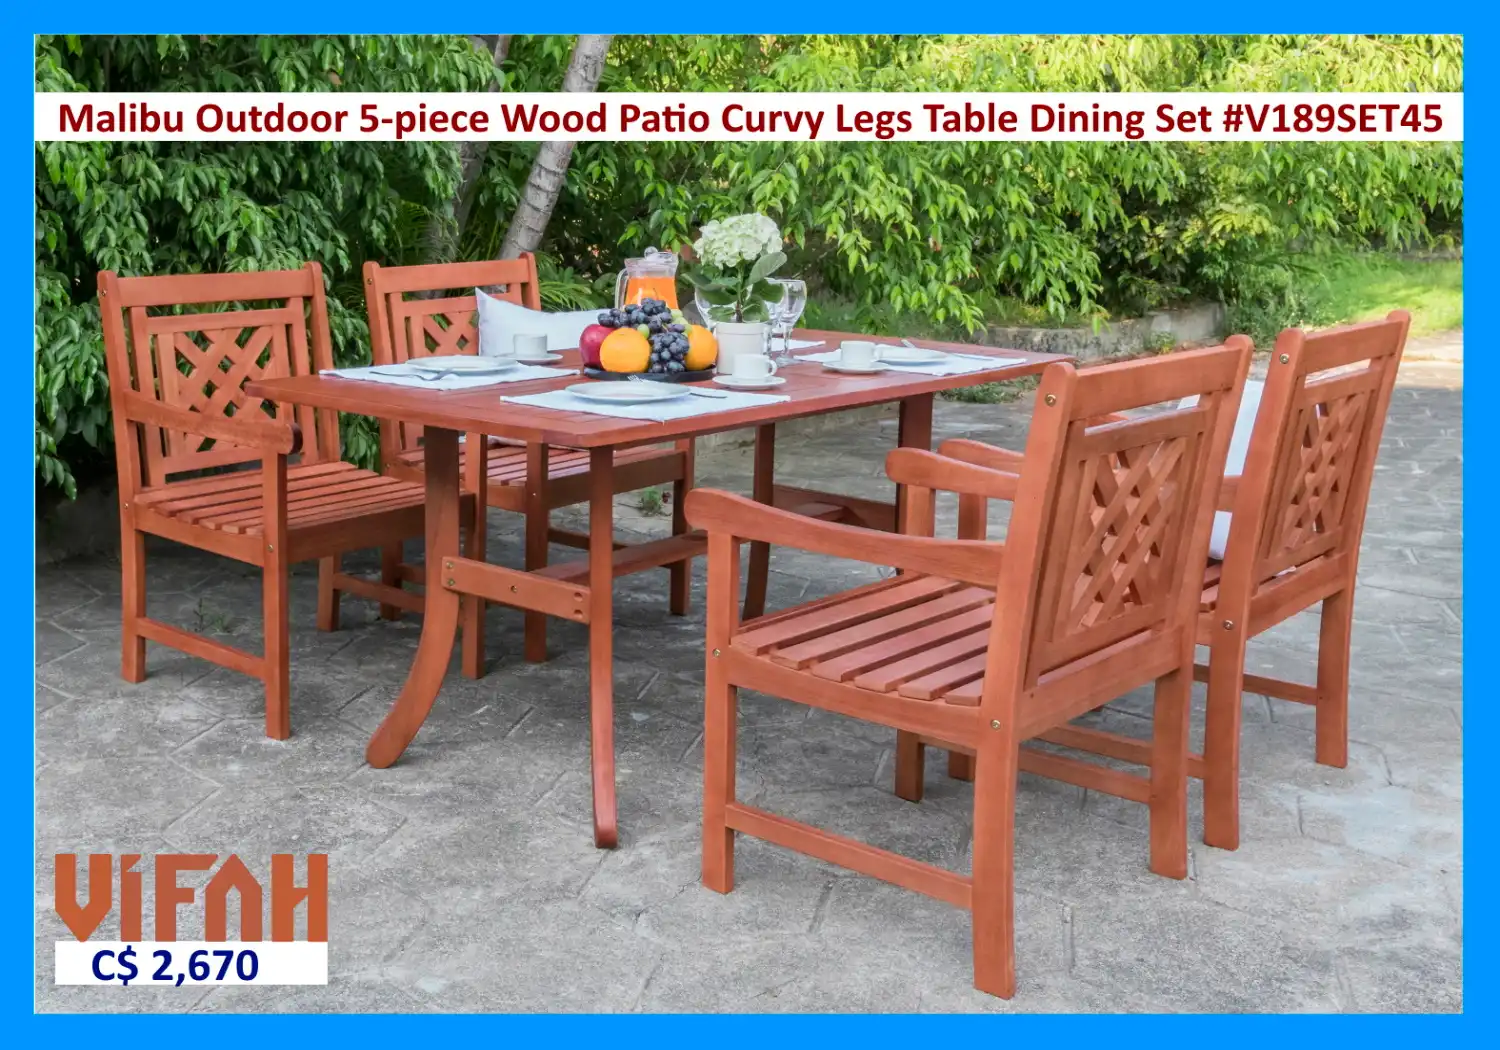 MALIBU Outdoor #V189SET45 5-piece Wood Patio Curvy Legs Table Dining Set